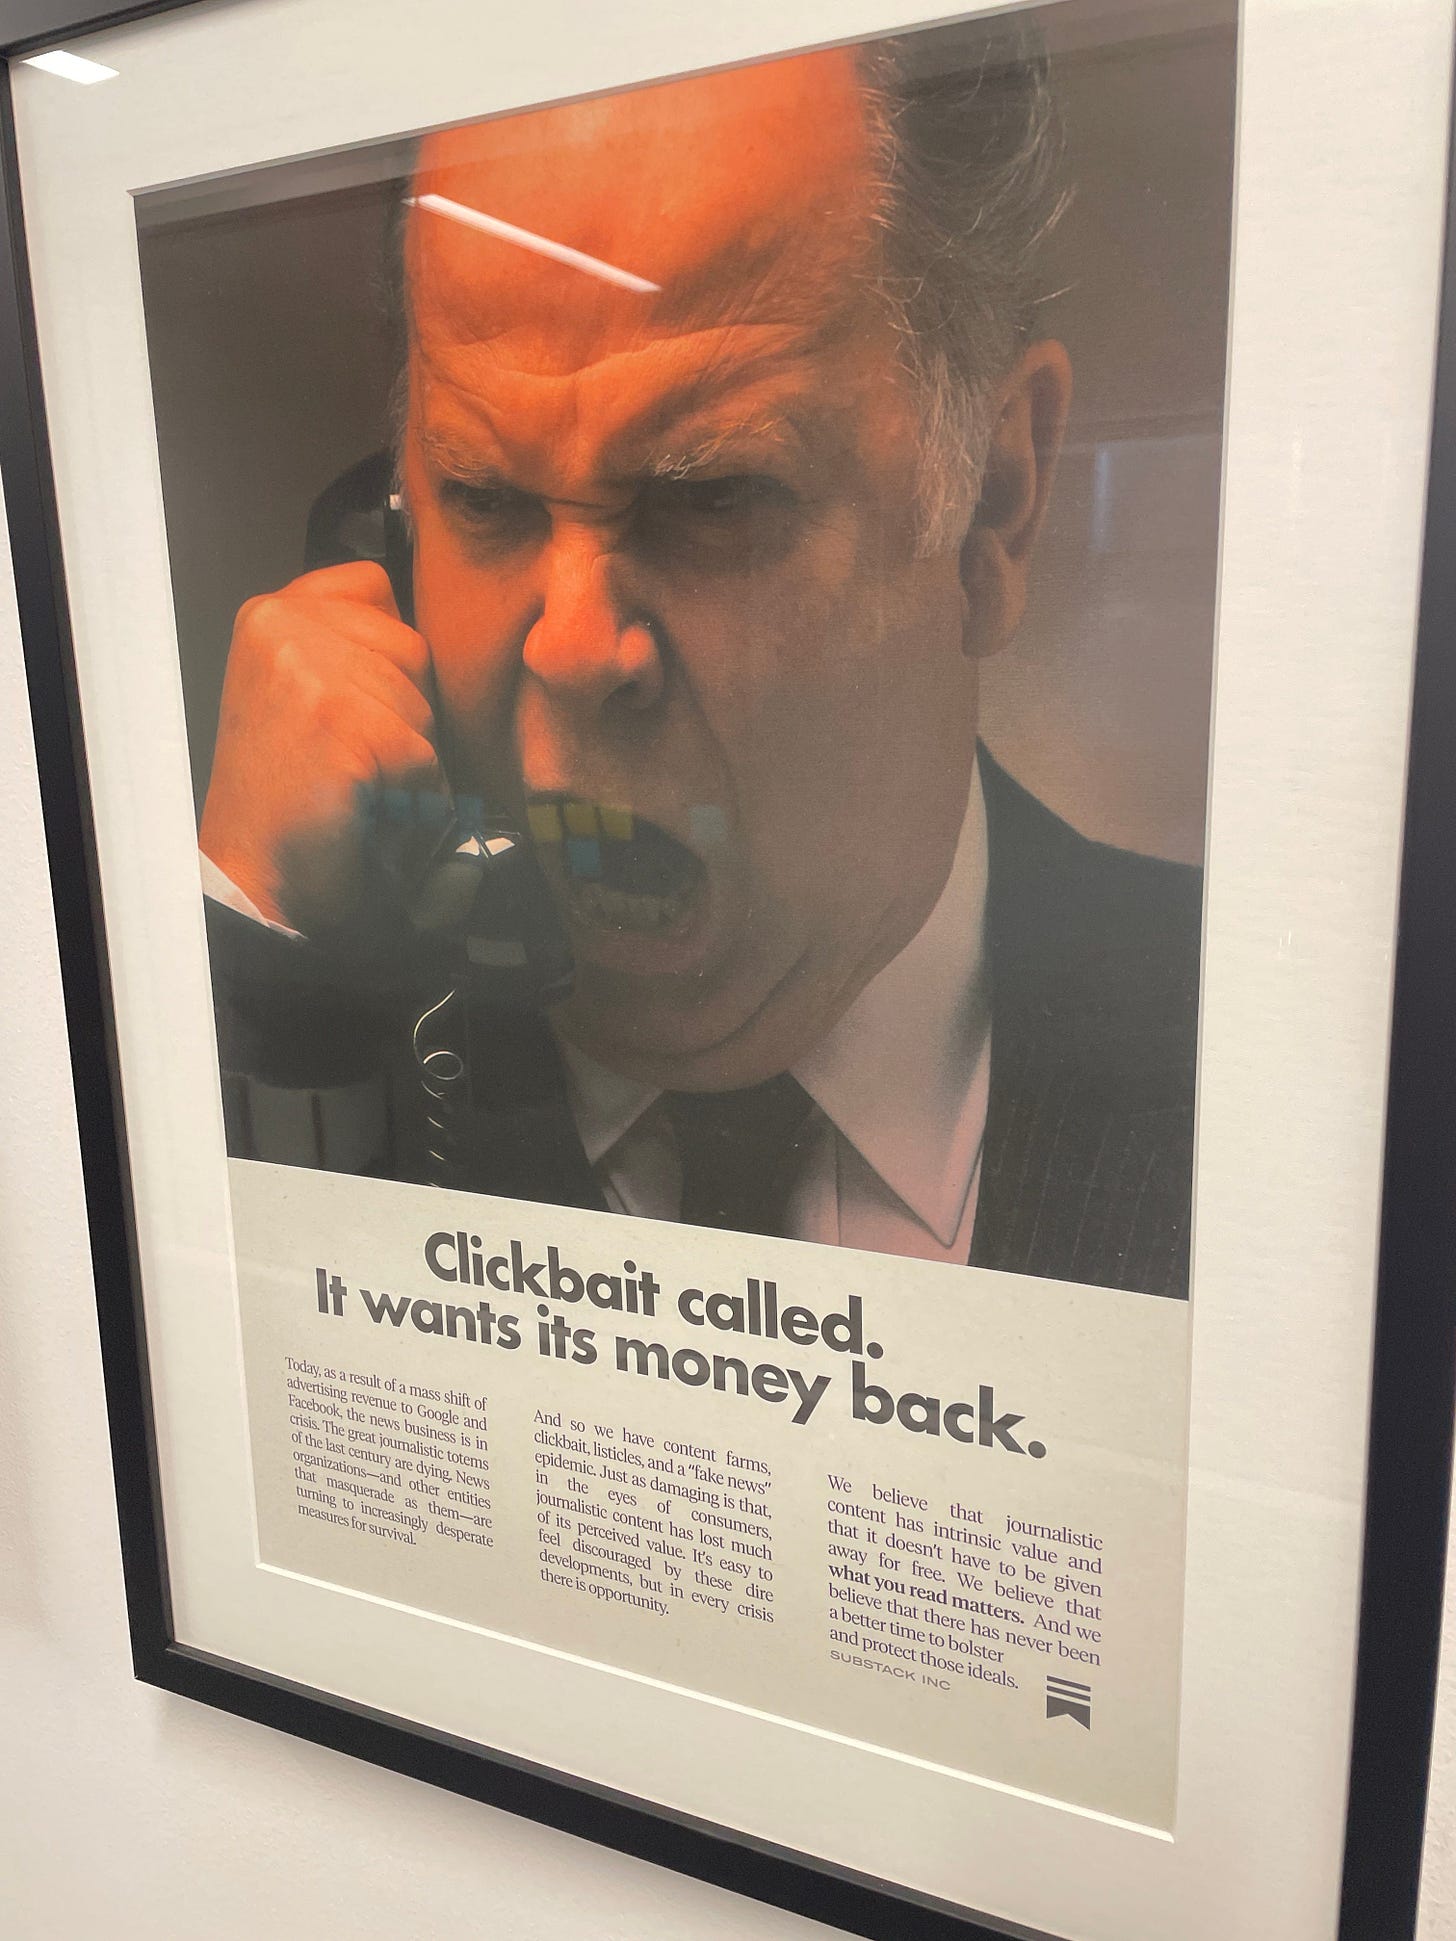 Clickbait called wall poster at Substack HQ